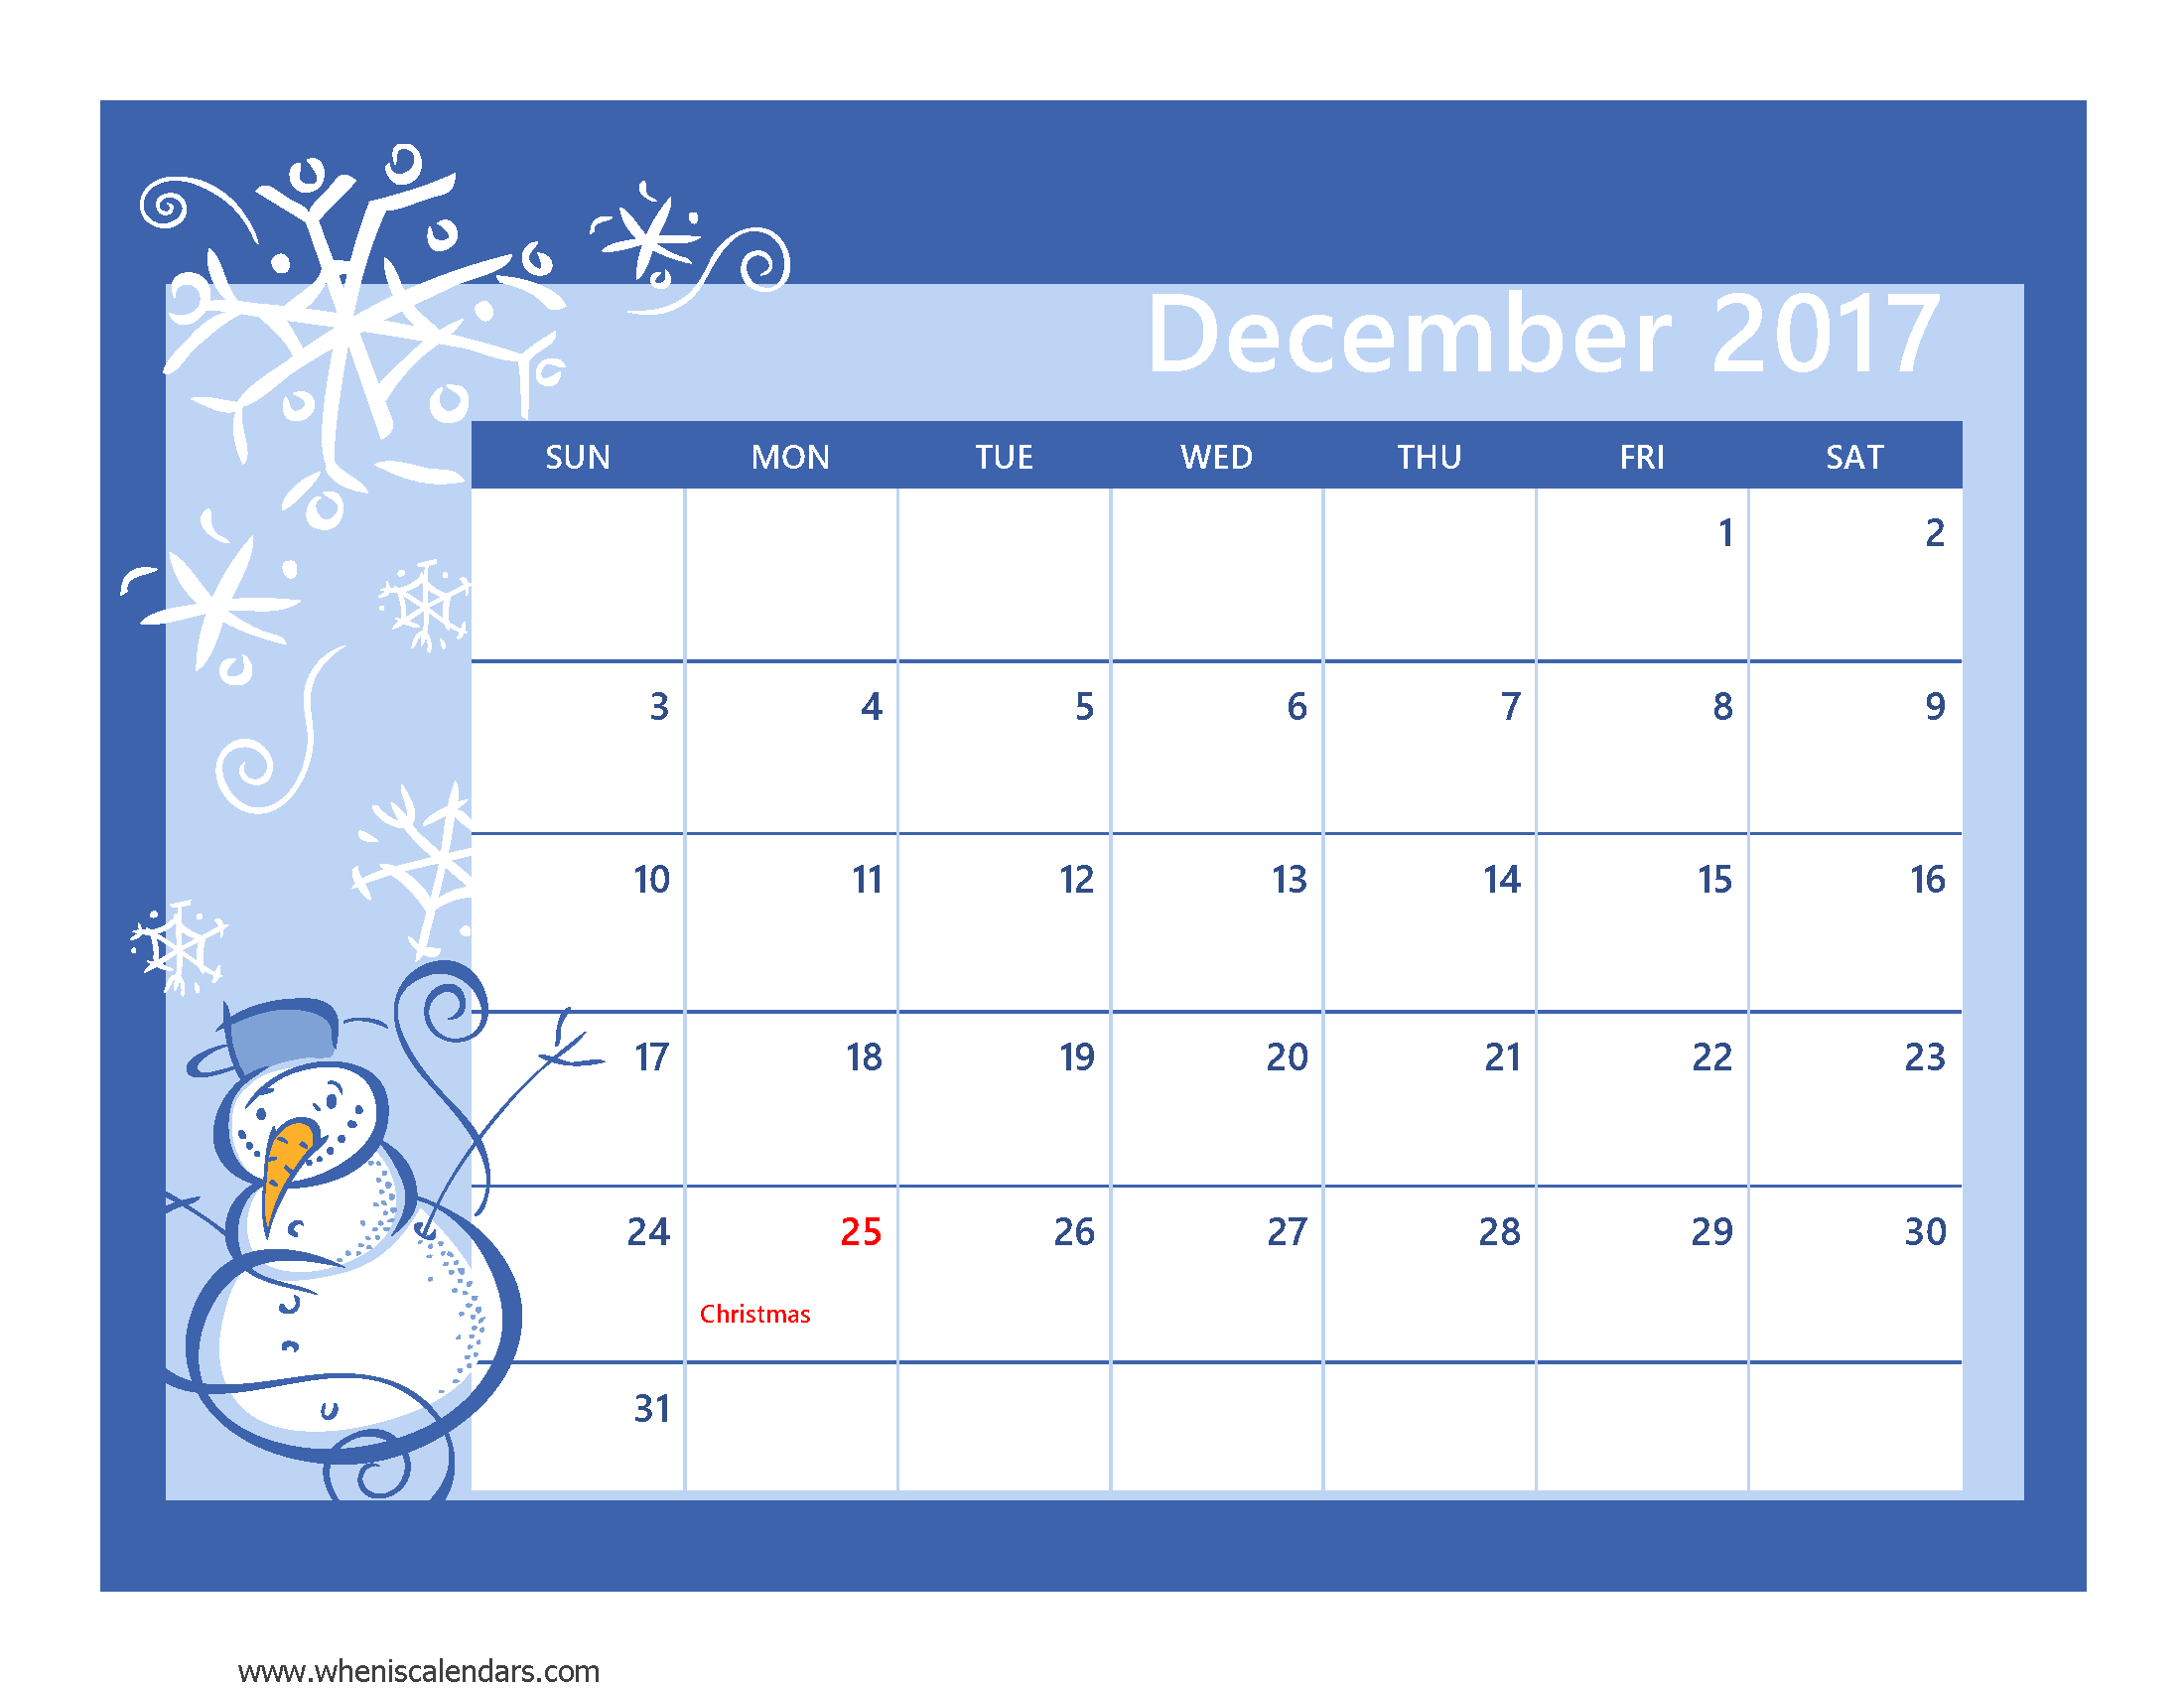 December 2017 calendar printable with holidays (5)